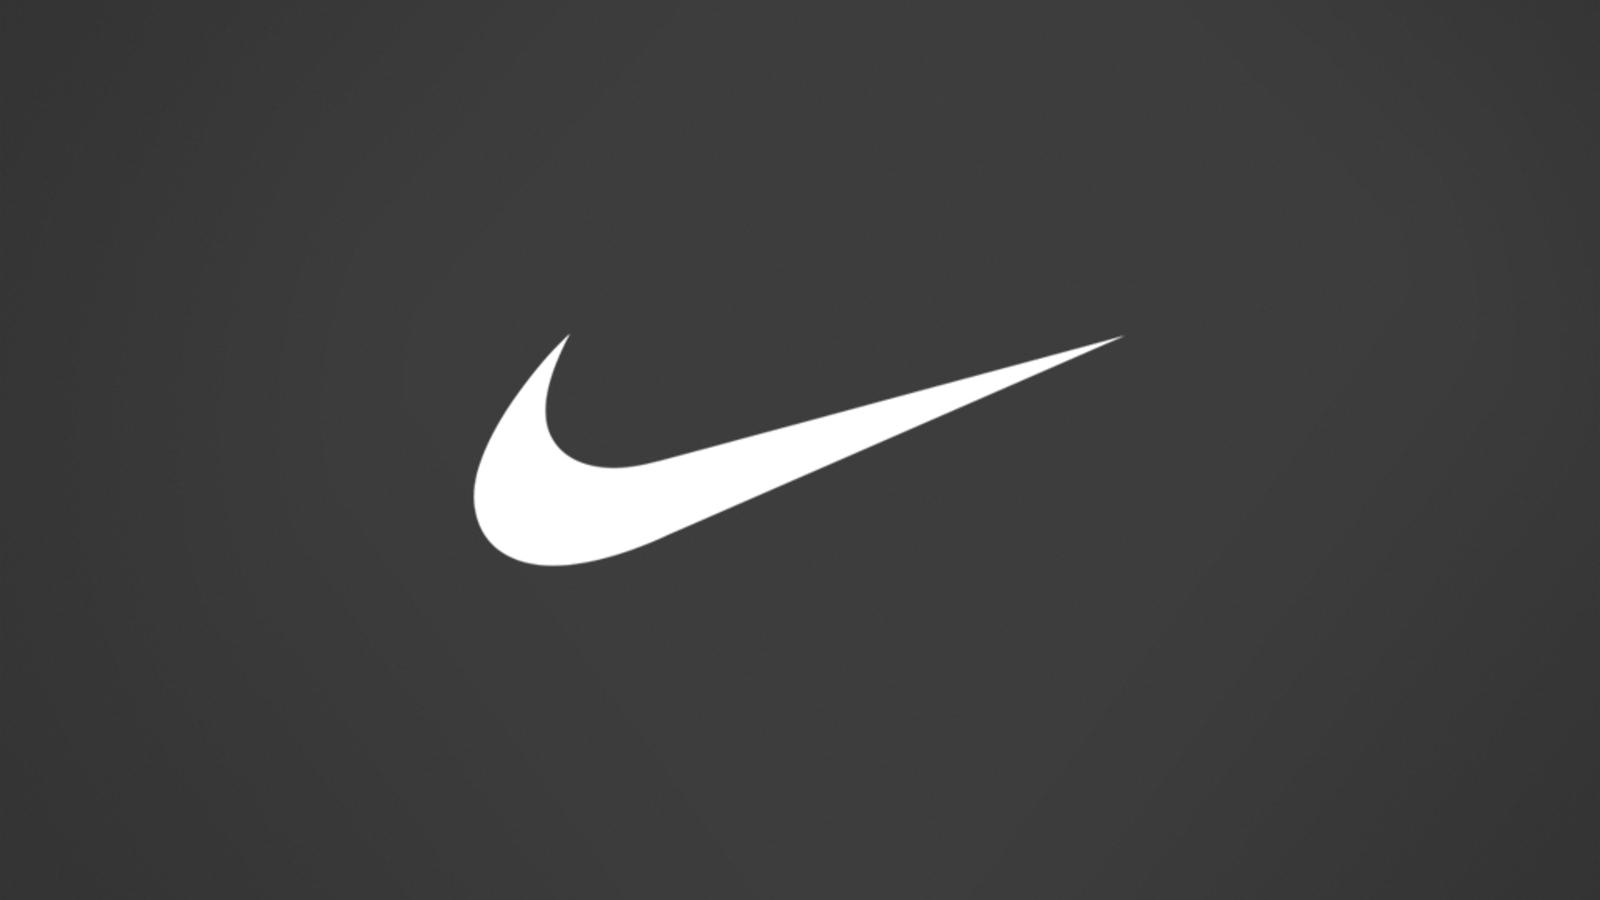 White Nike Logo - NIKE, Inc. Announces Category Leadership Changes